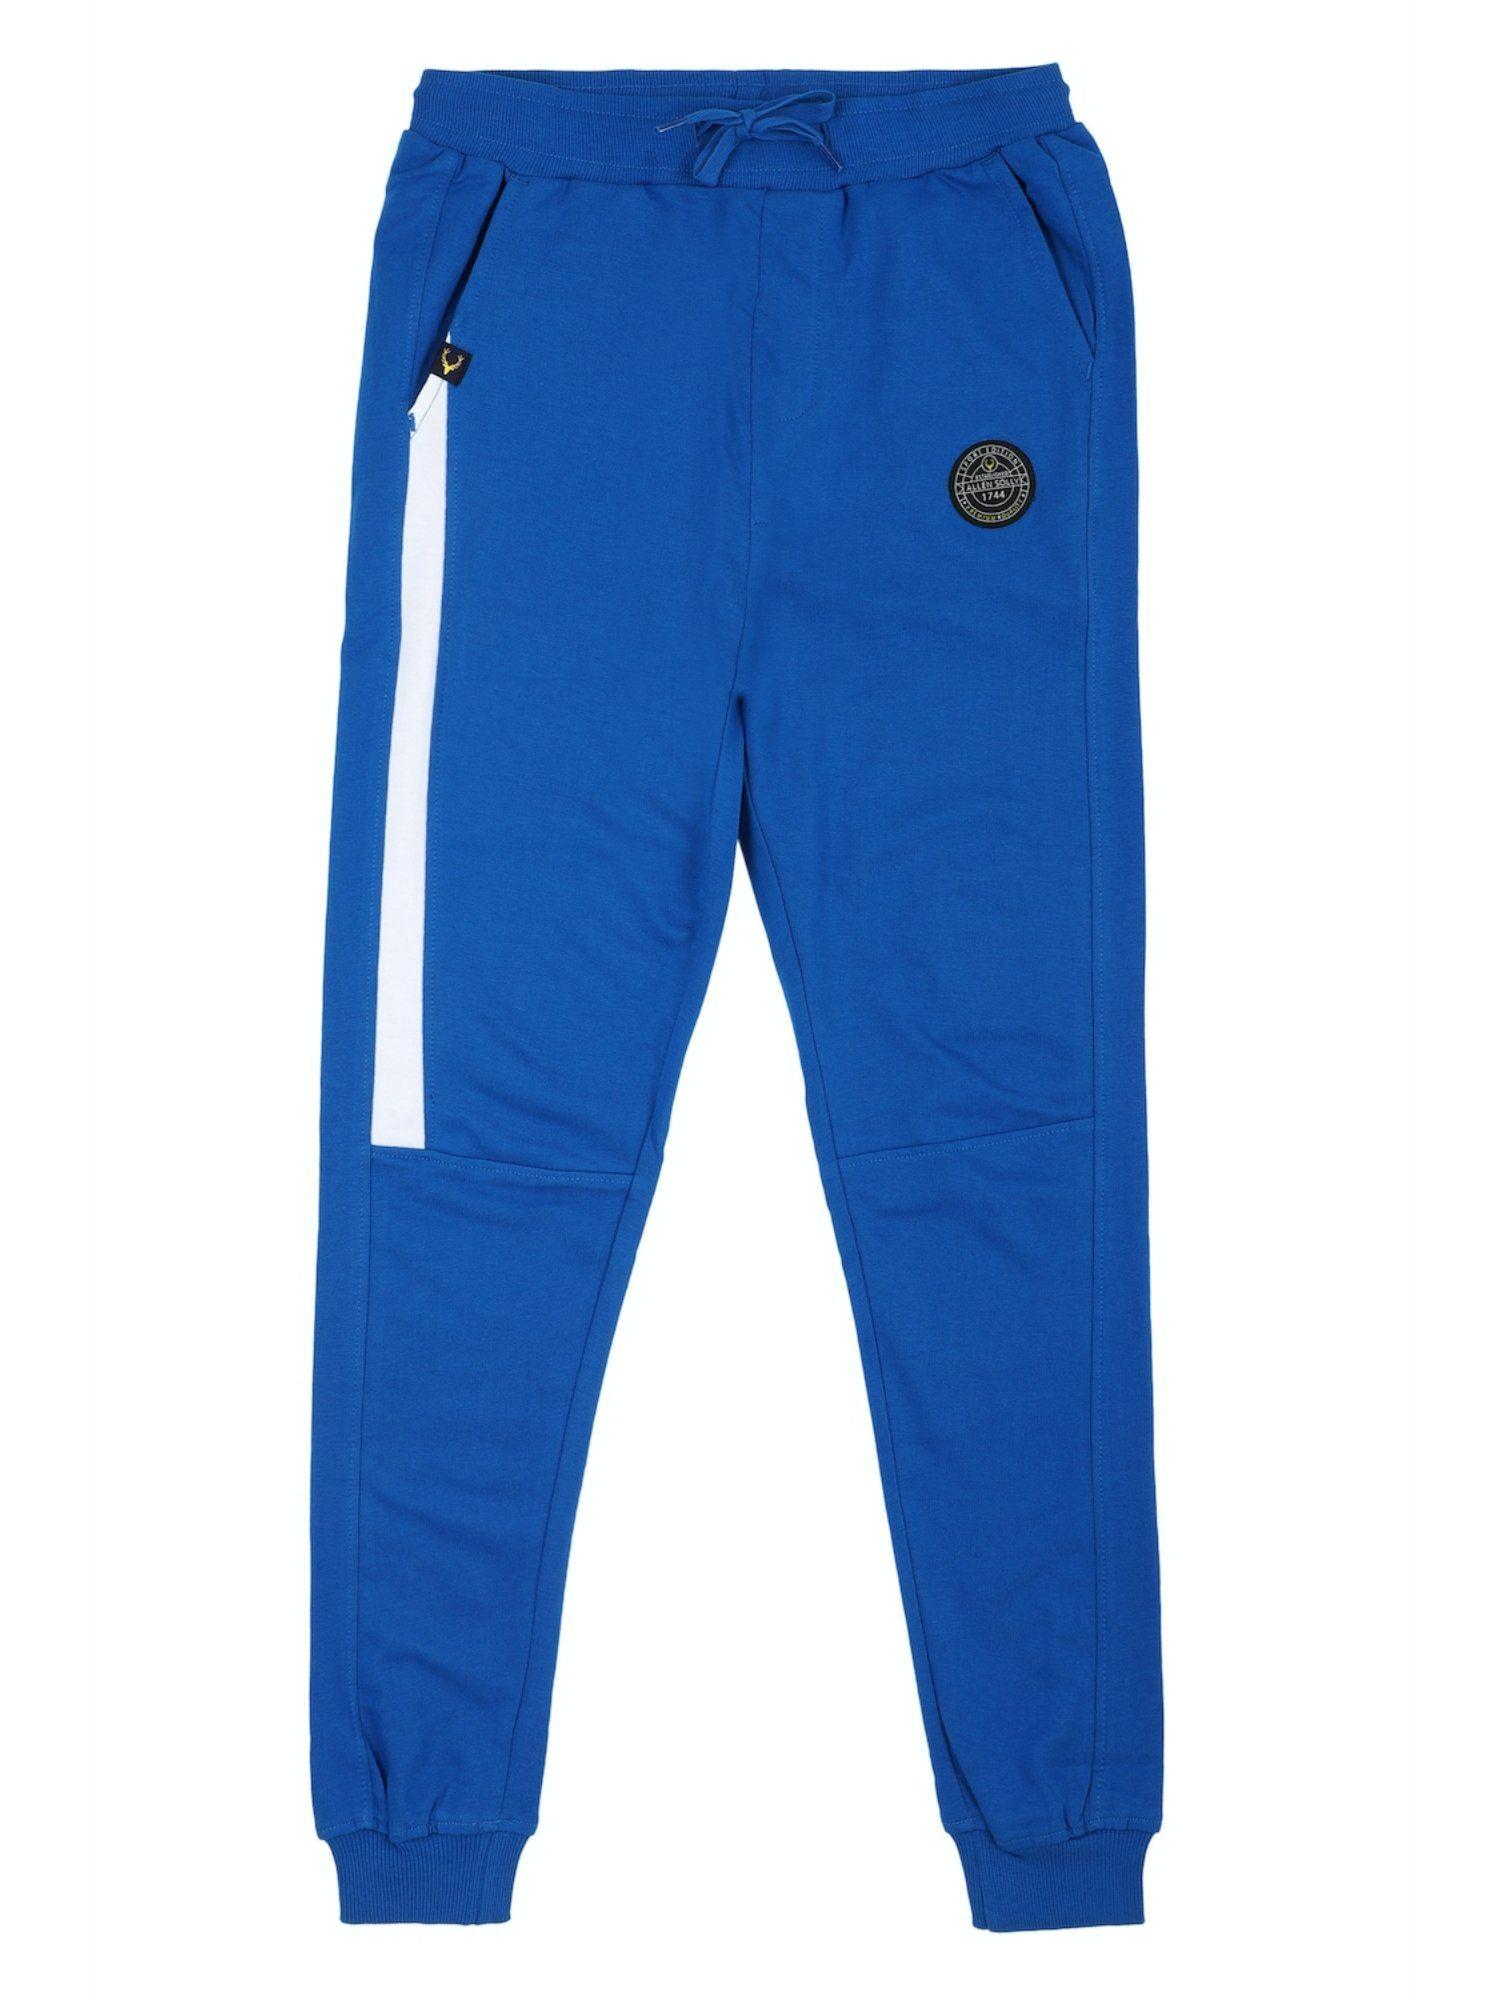 boys blue regular fit patterned jogger pants